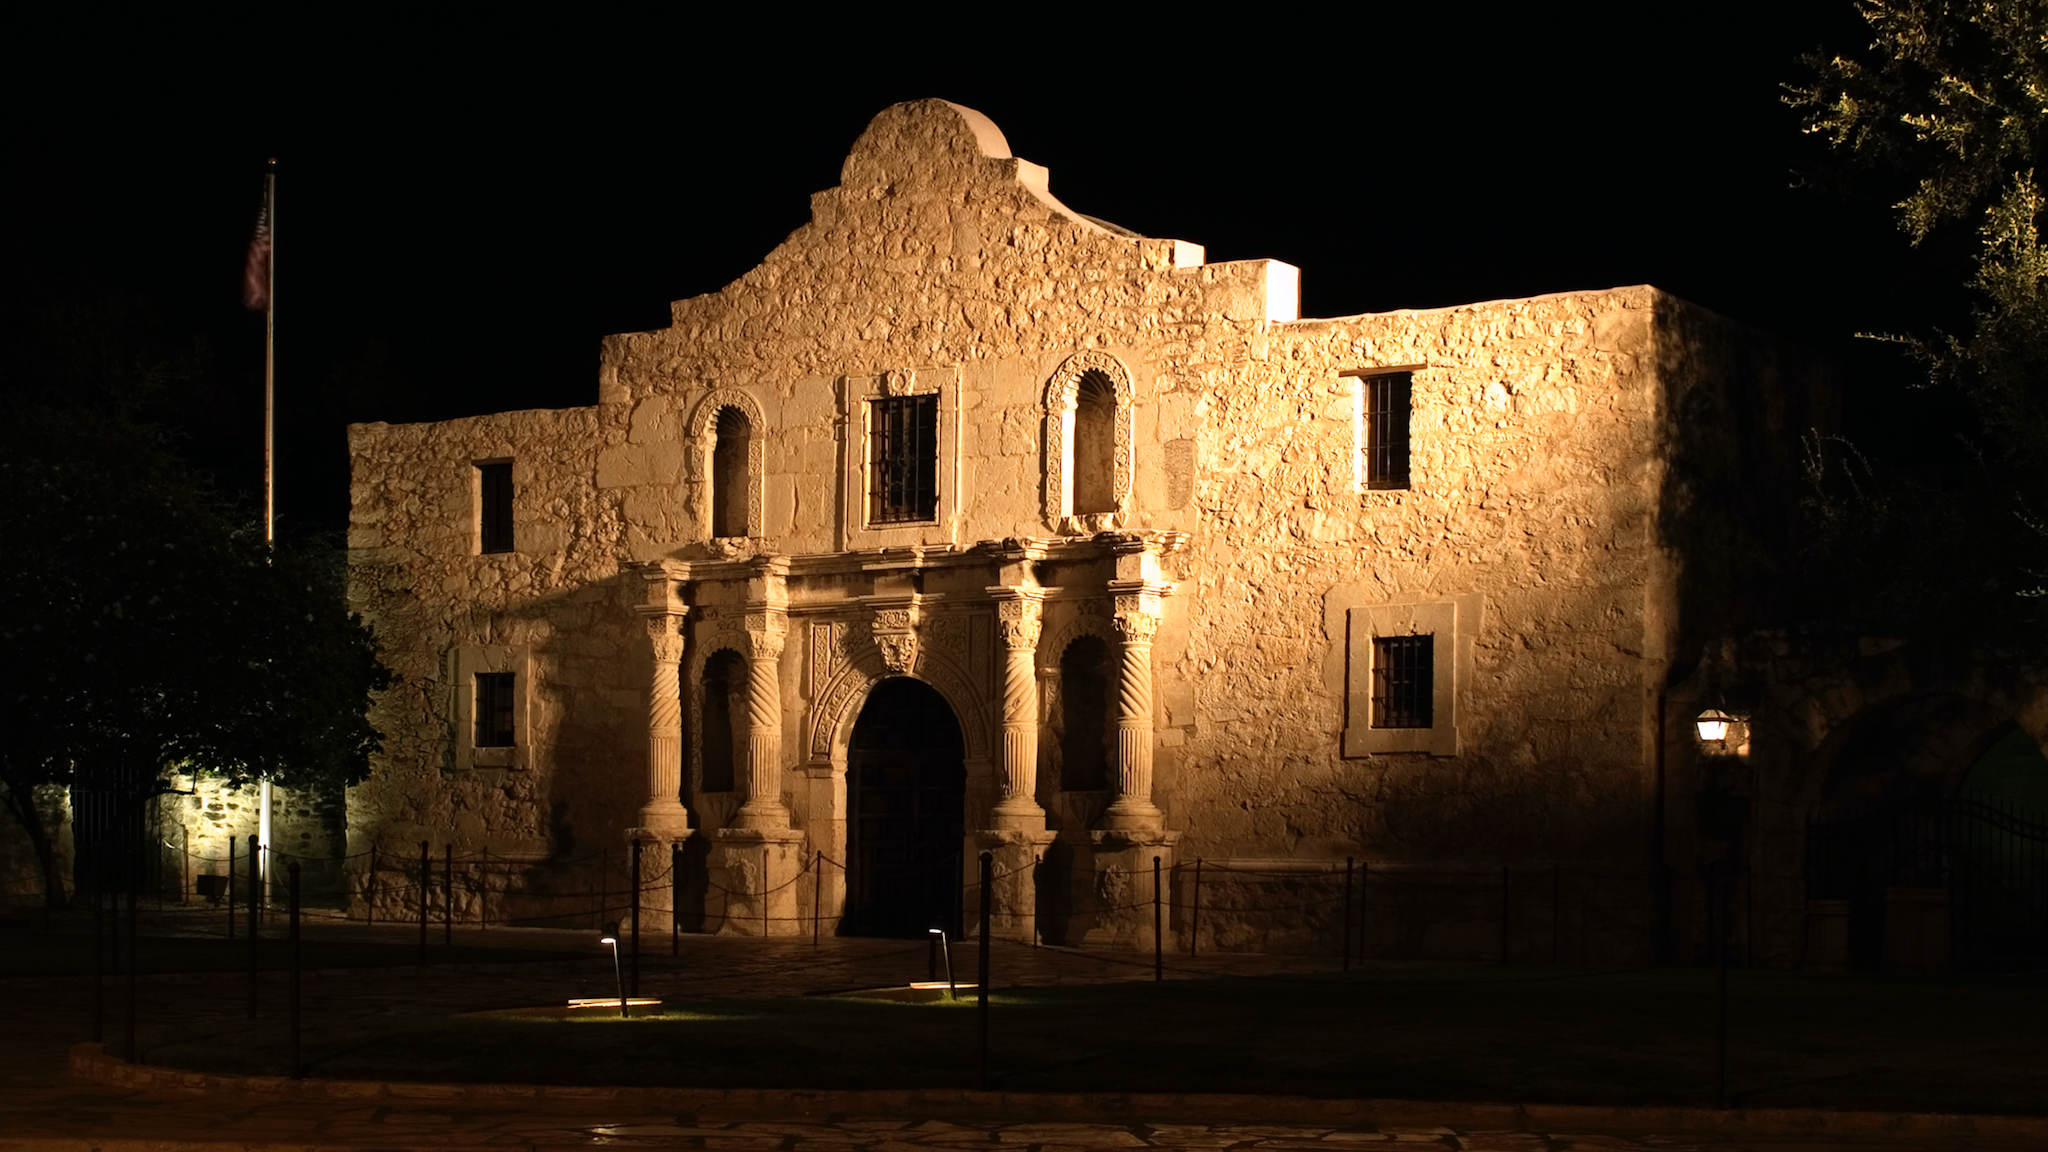 Night Time Photo Of The Famous Historic Alamo In San Antonio Texas. Don Despain Of Rekindle.